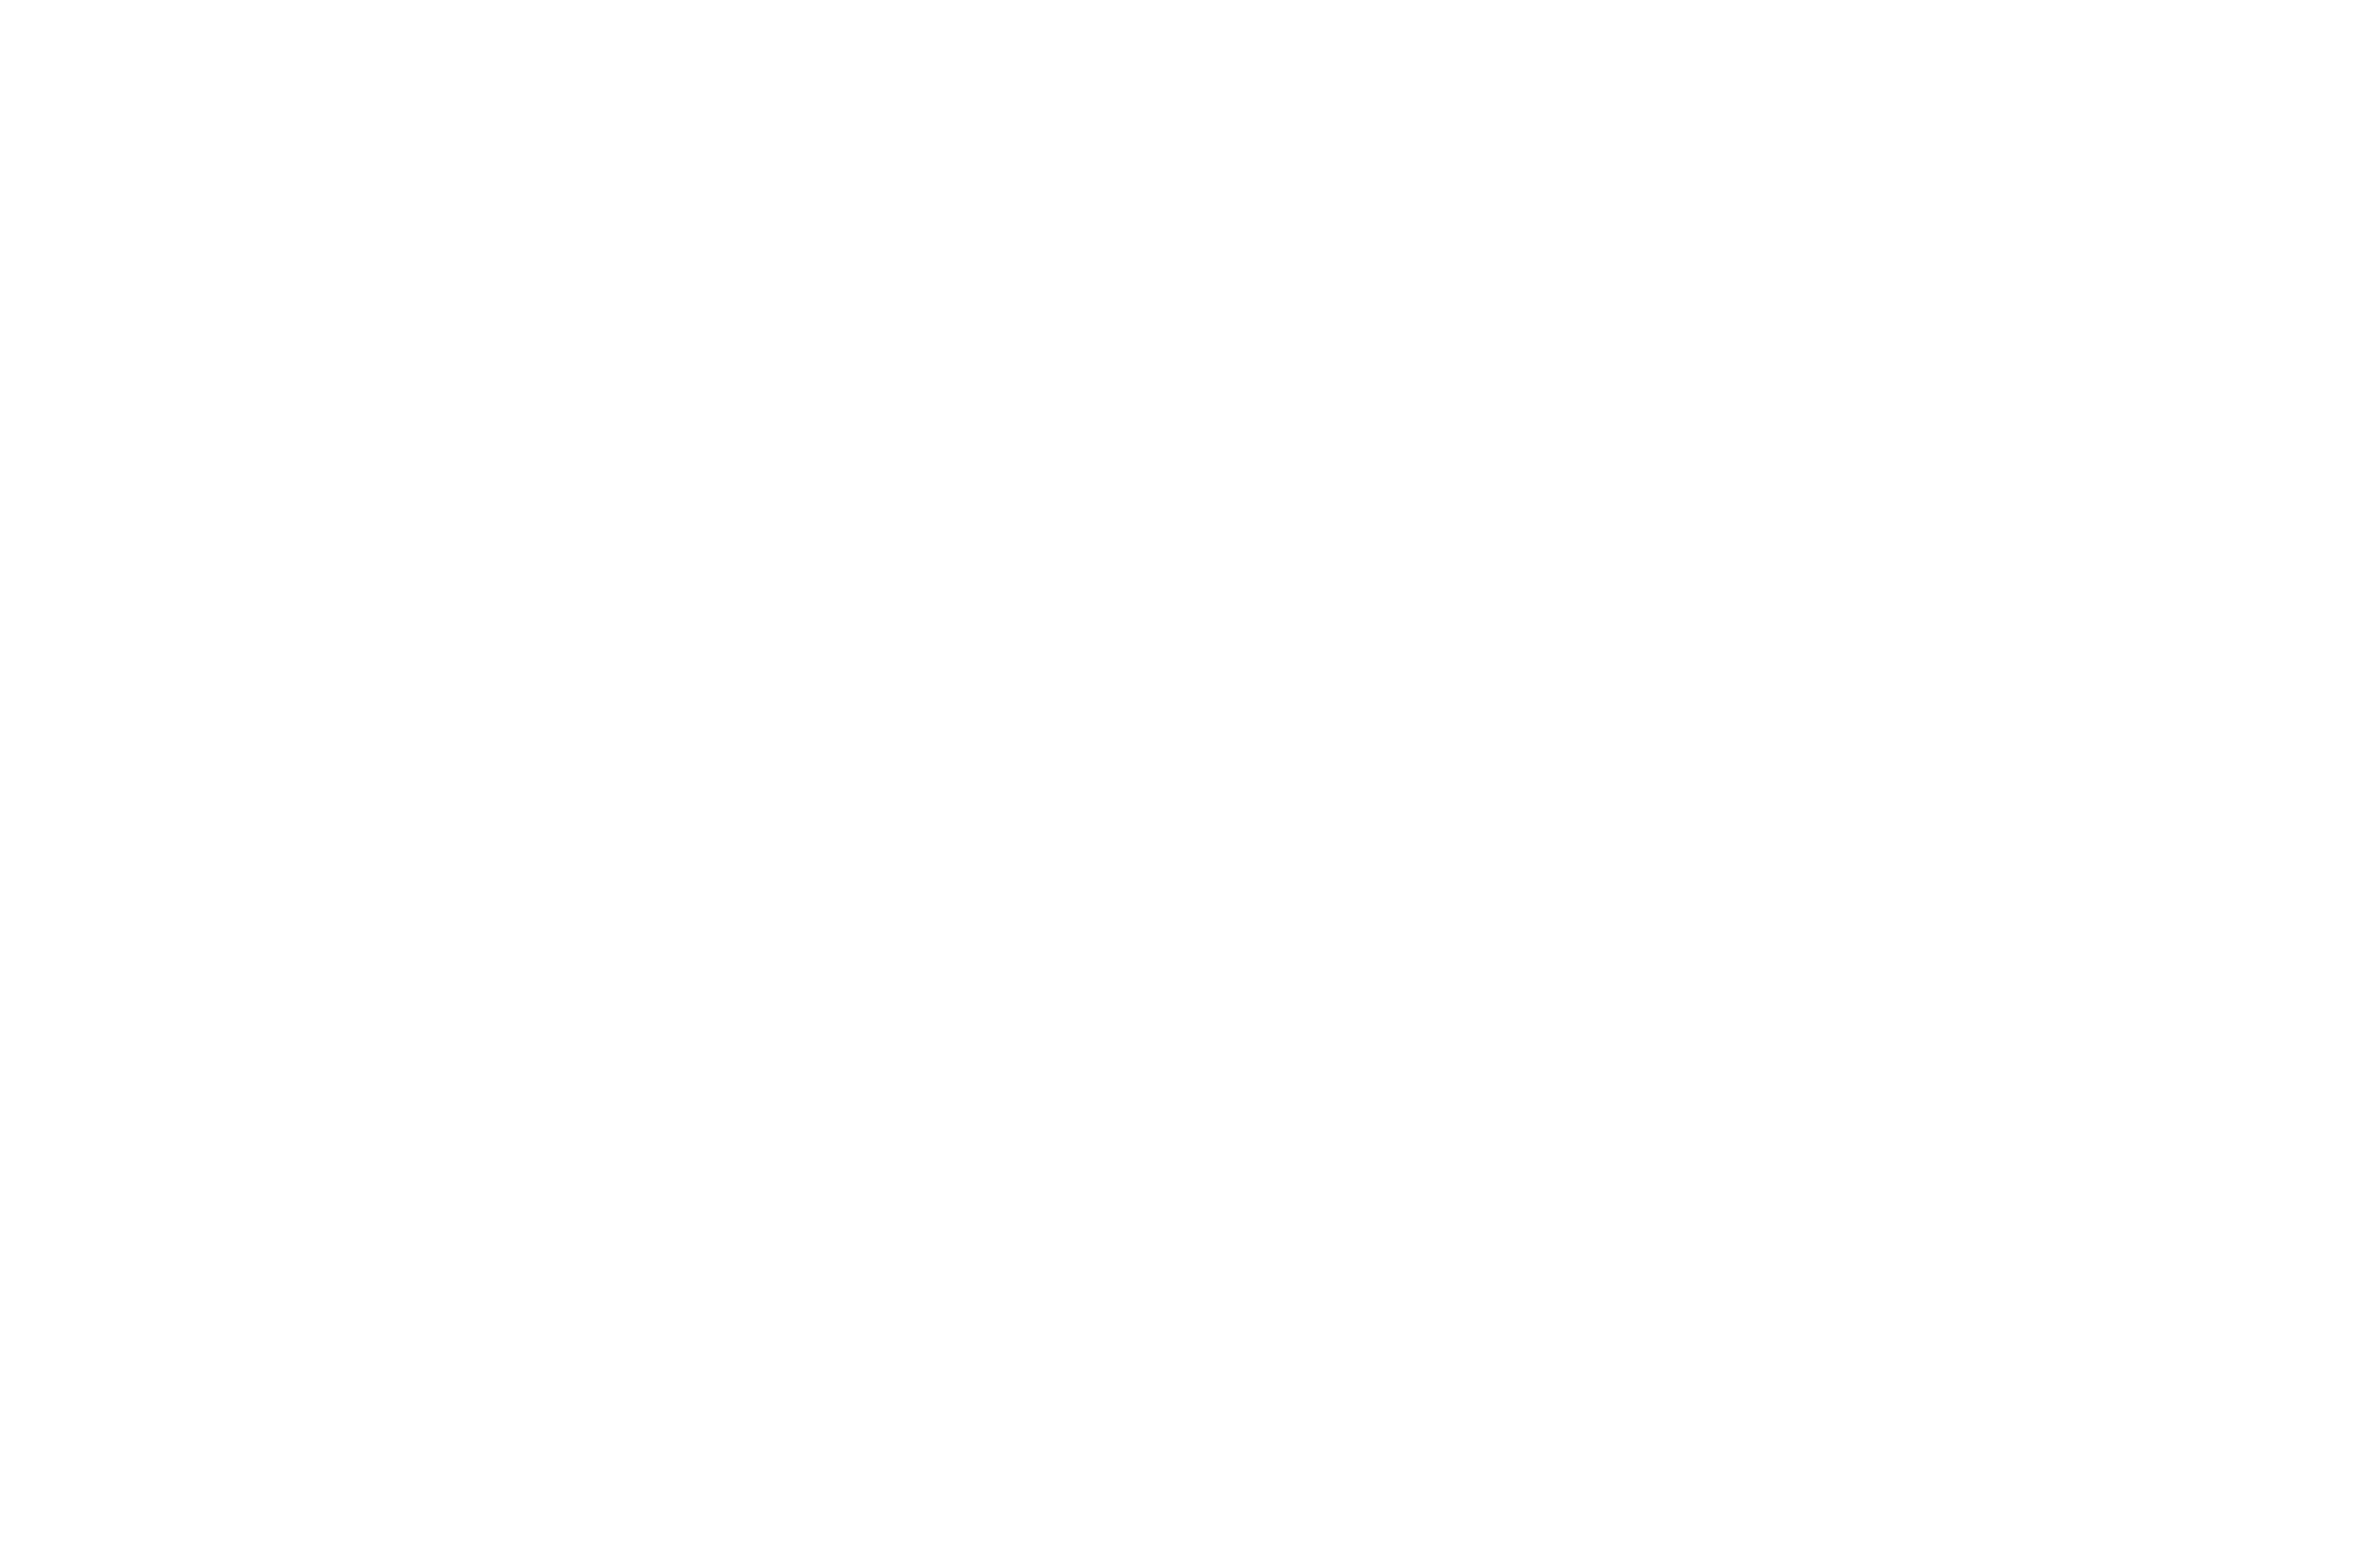 Nomination-ProdigyFilmFestival2019-BestInternationalDirectionCinematography-MollyHaddonMattBedford-AConversation copy.png